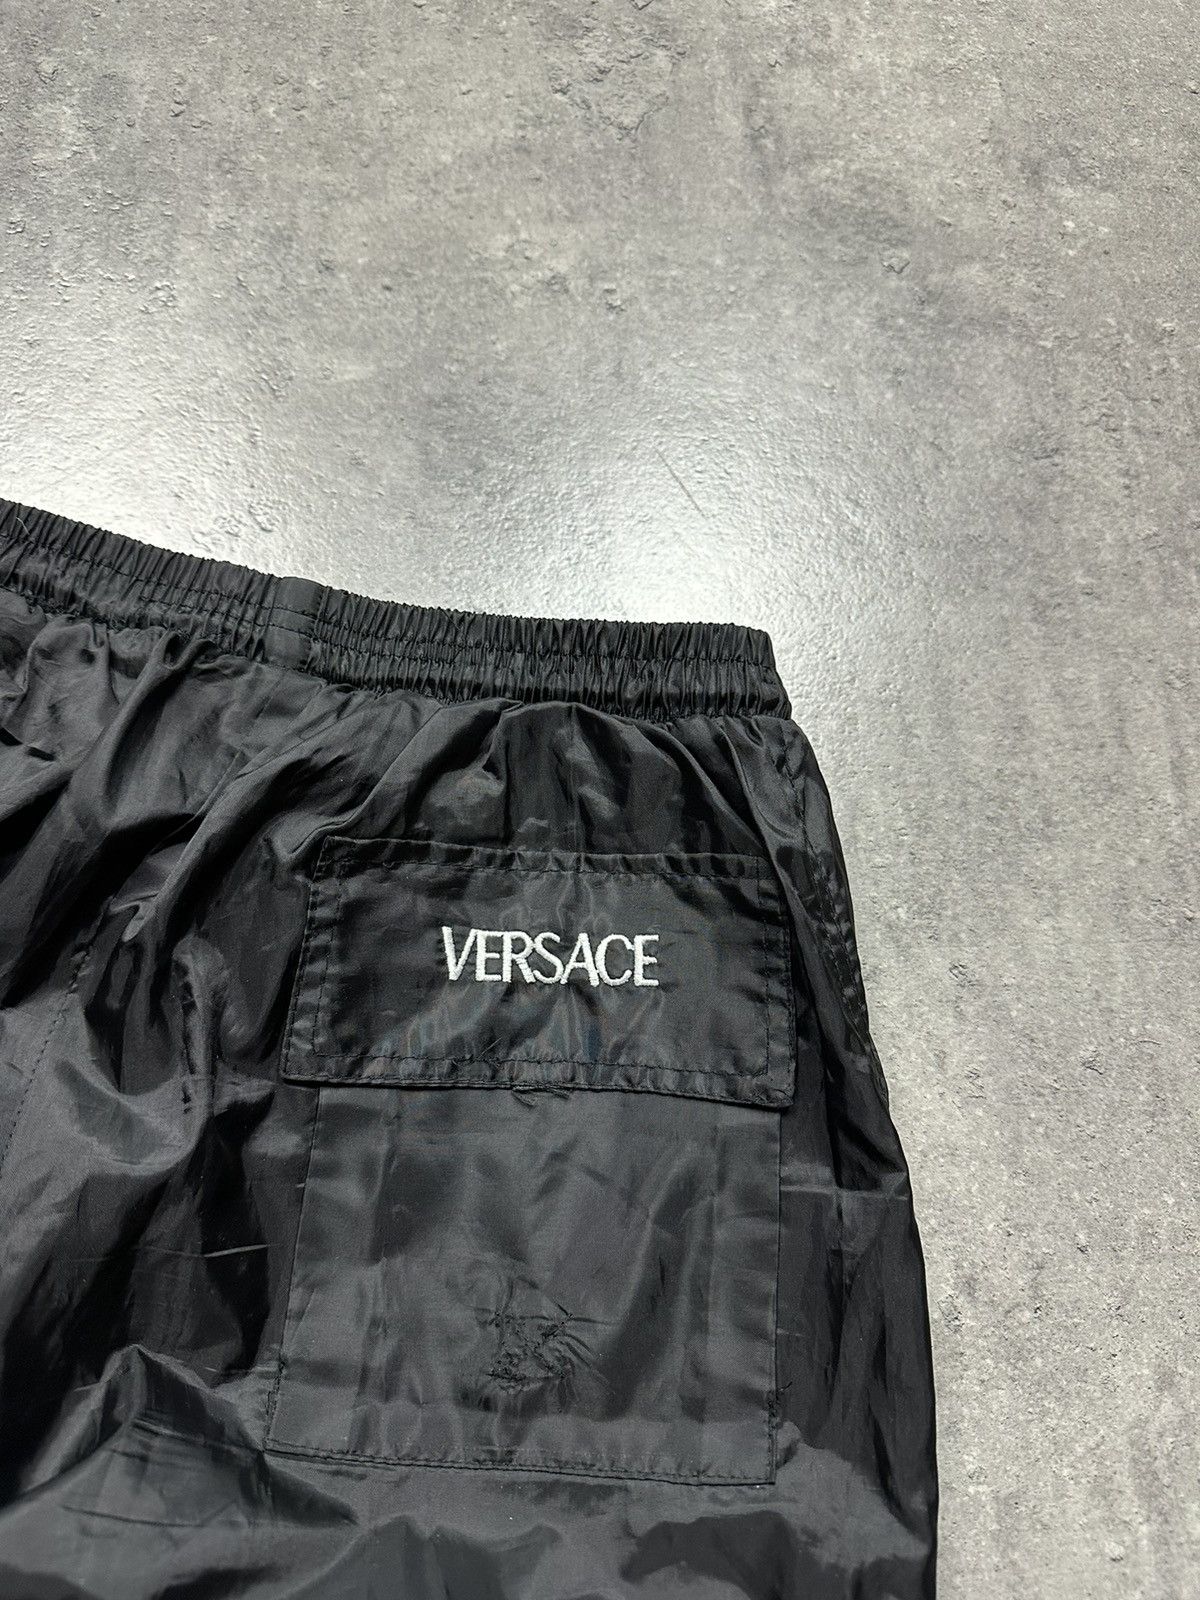 Versace Versace ortalion pant rustling oversize pant techwear Size 27" / US 4 / IT 40 - 2 Preview